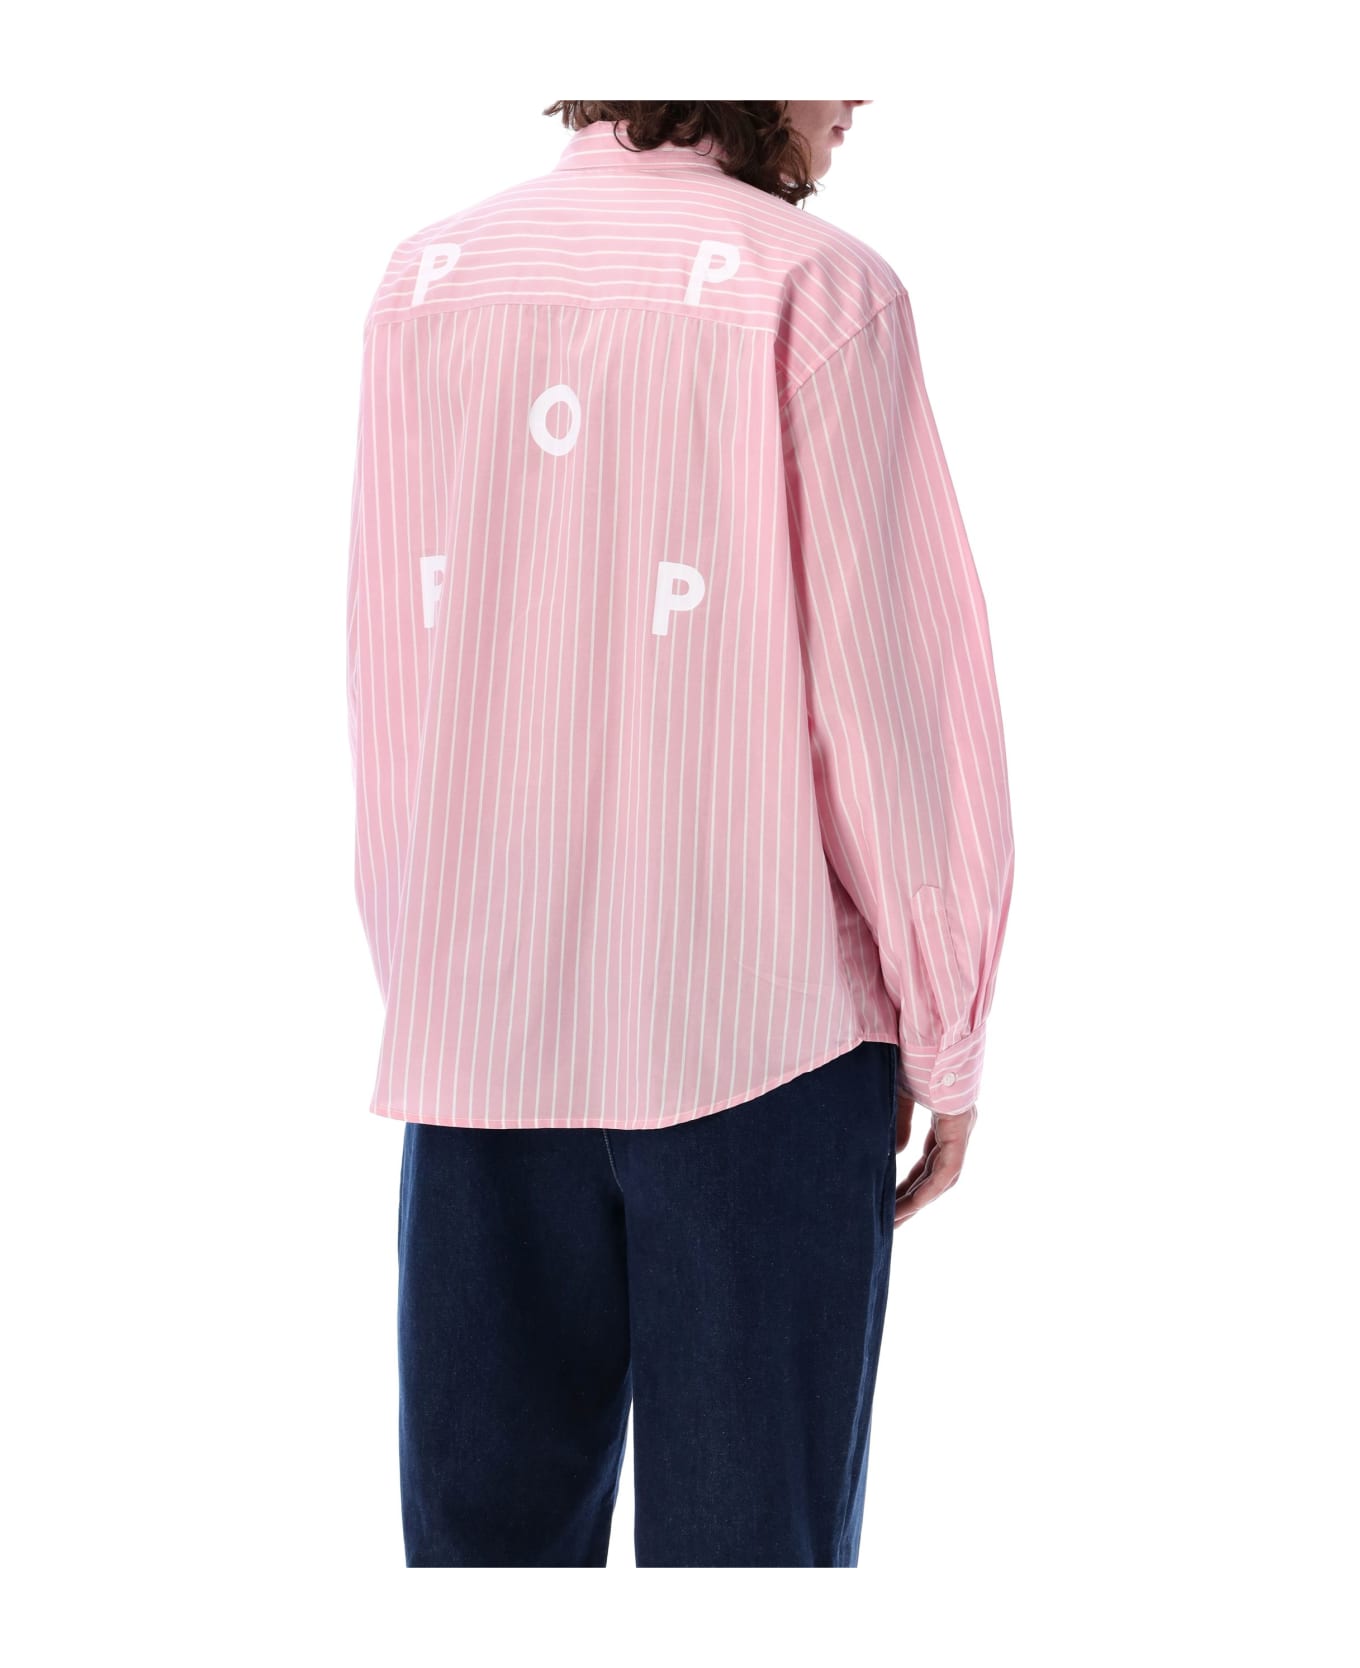 Pop Trading Company Pop Striped Shirt - PINK